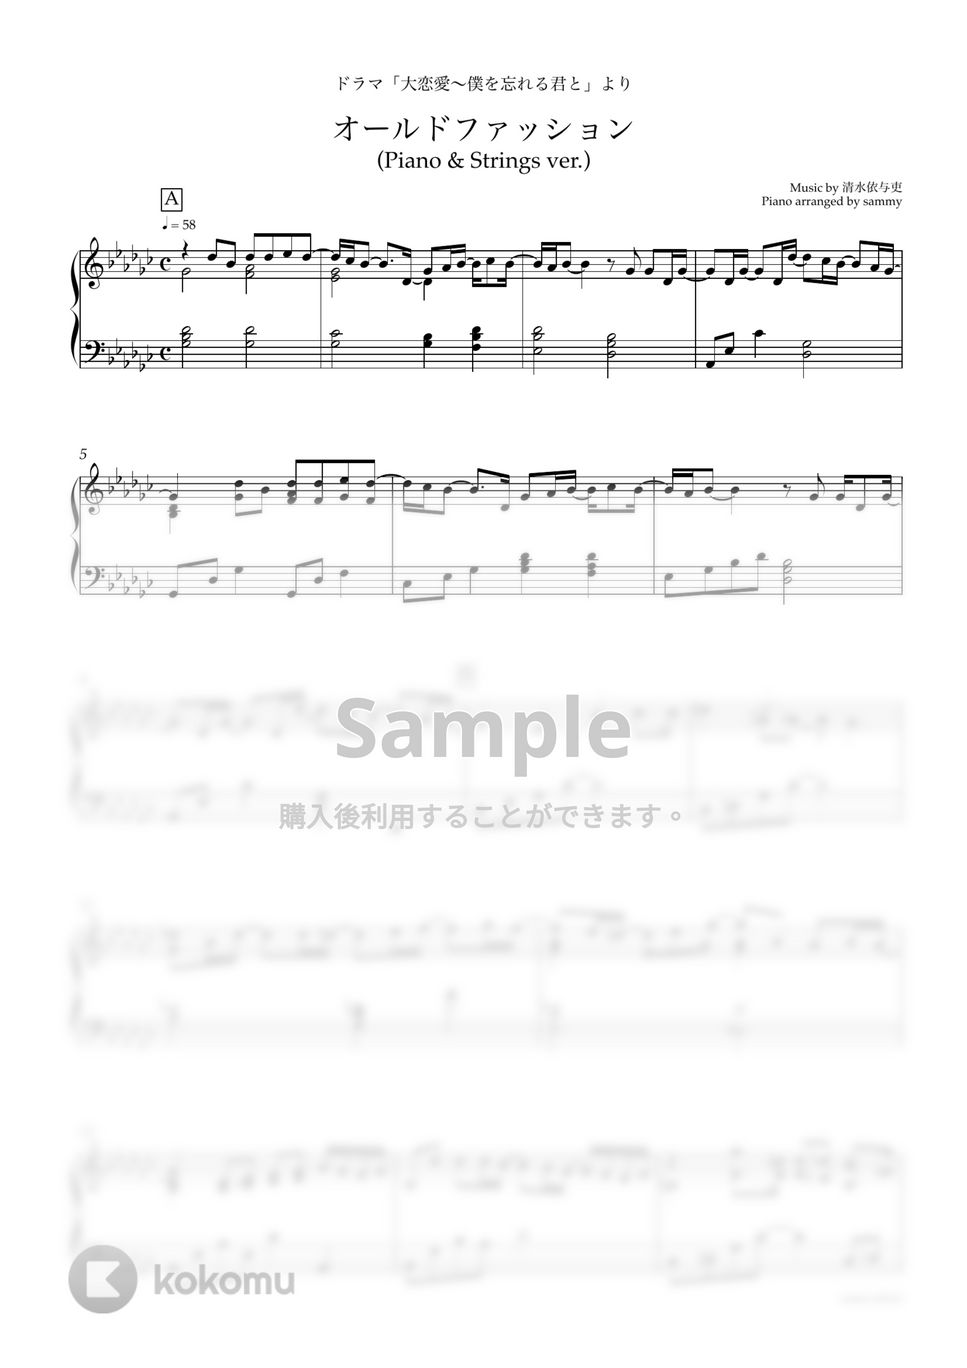 back number - オールドファッション (Piano & Stringe ver.) by sammy